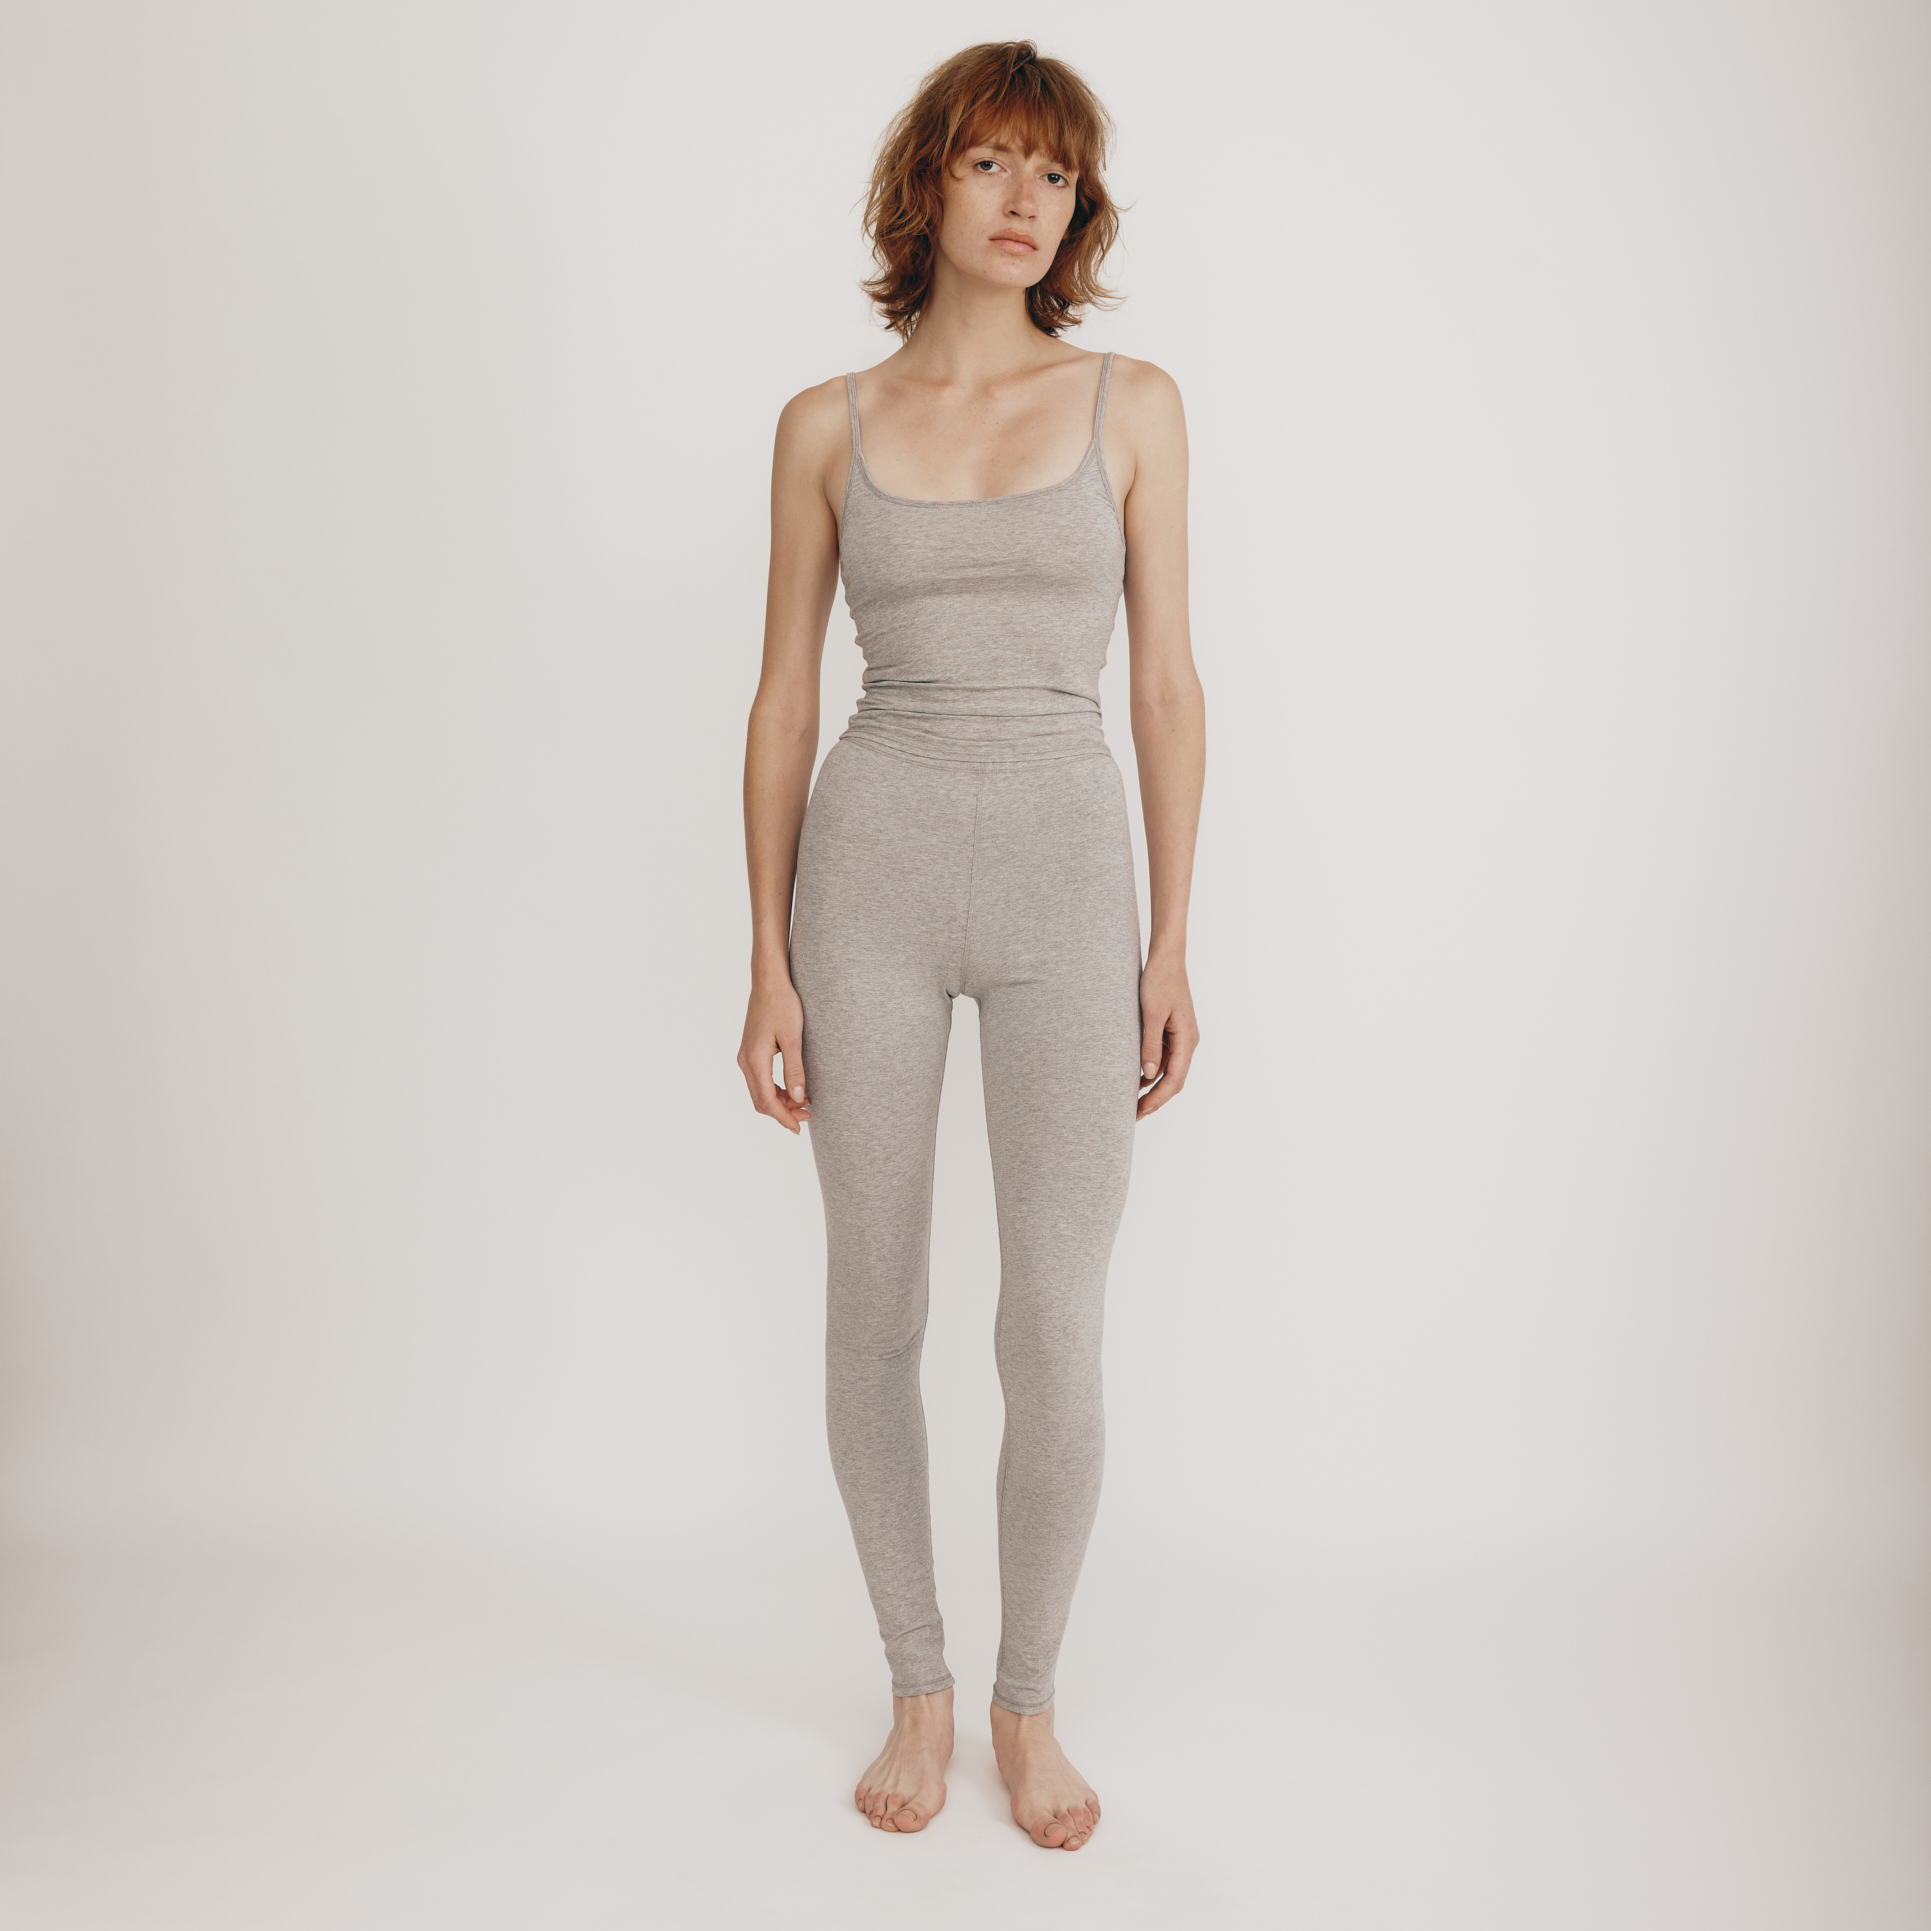 Kryptic Women Cotton,Solid Grey melange colour Ankle length Leggings